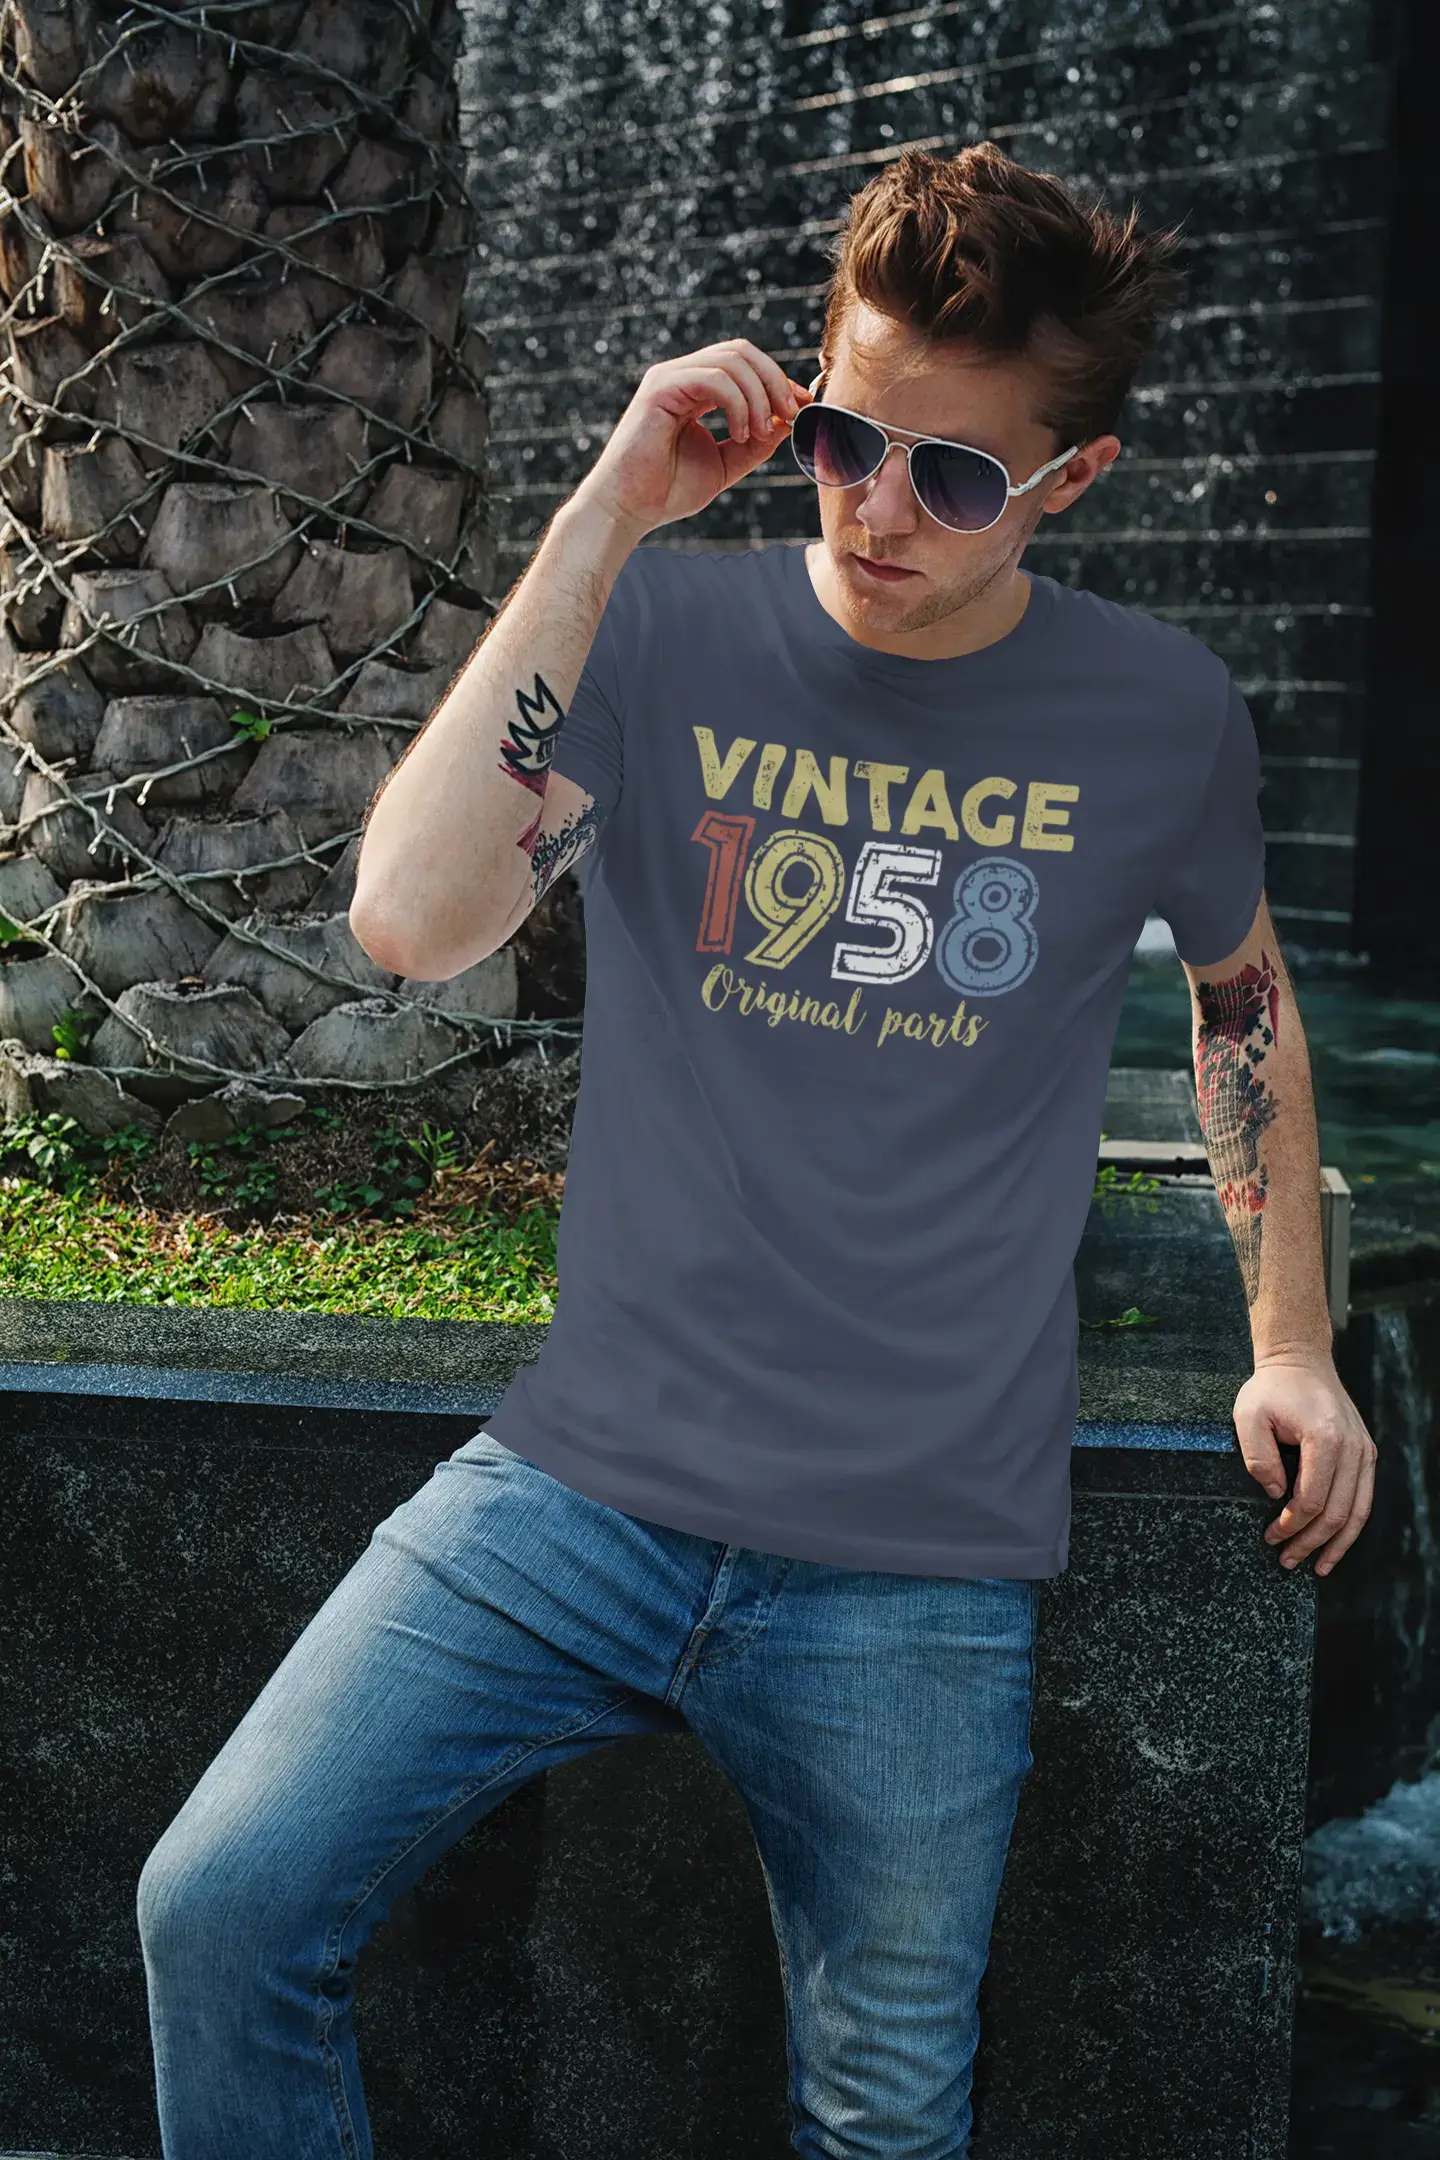 ULTRABASIC - Graphic Printed Men's Vintage 1958 T-Shirt Navy